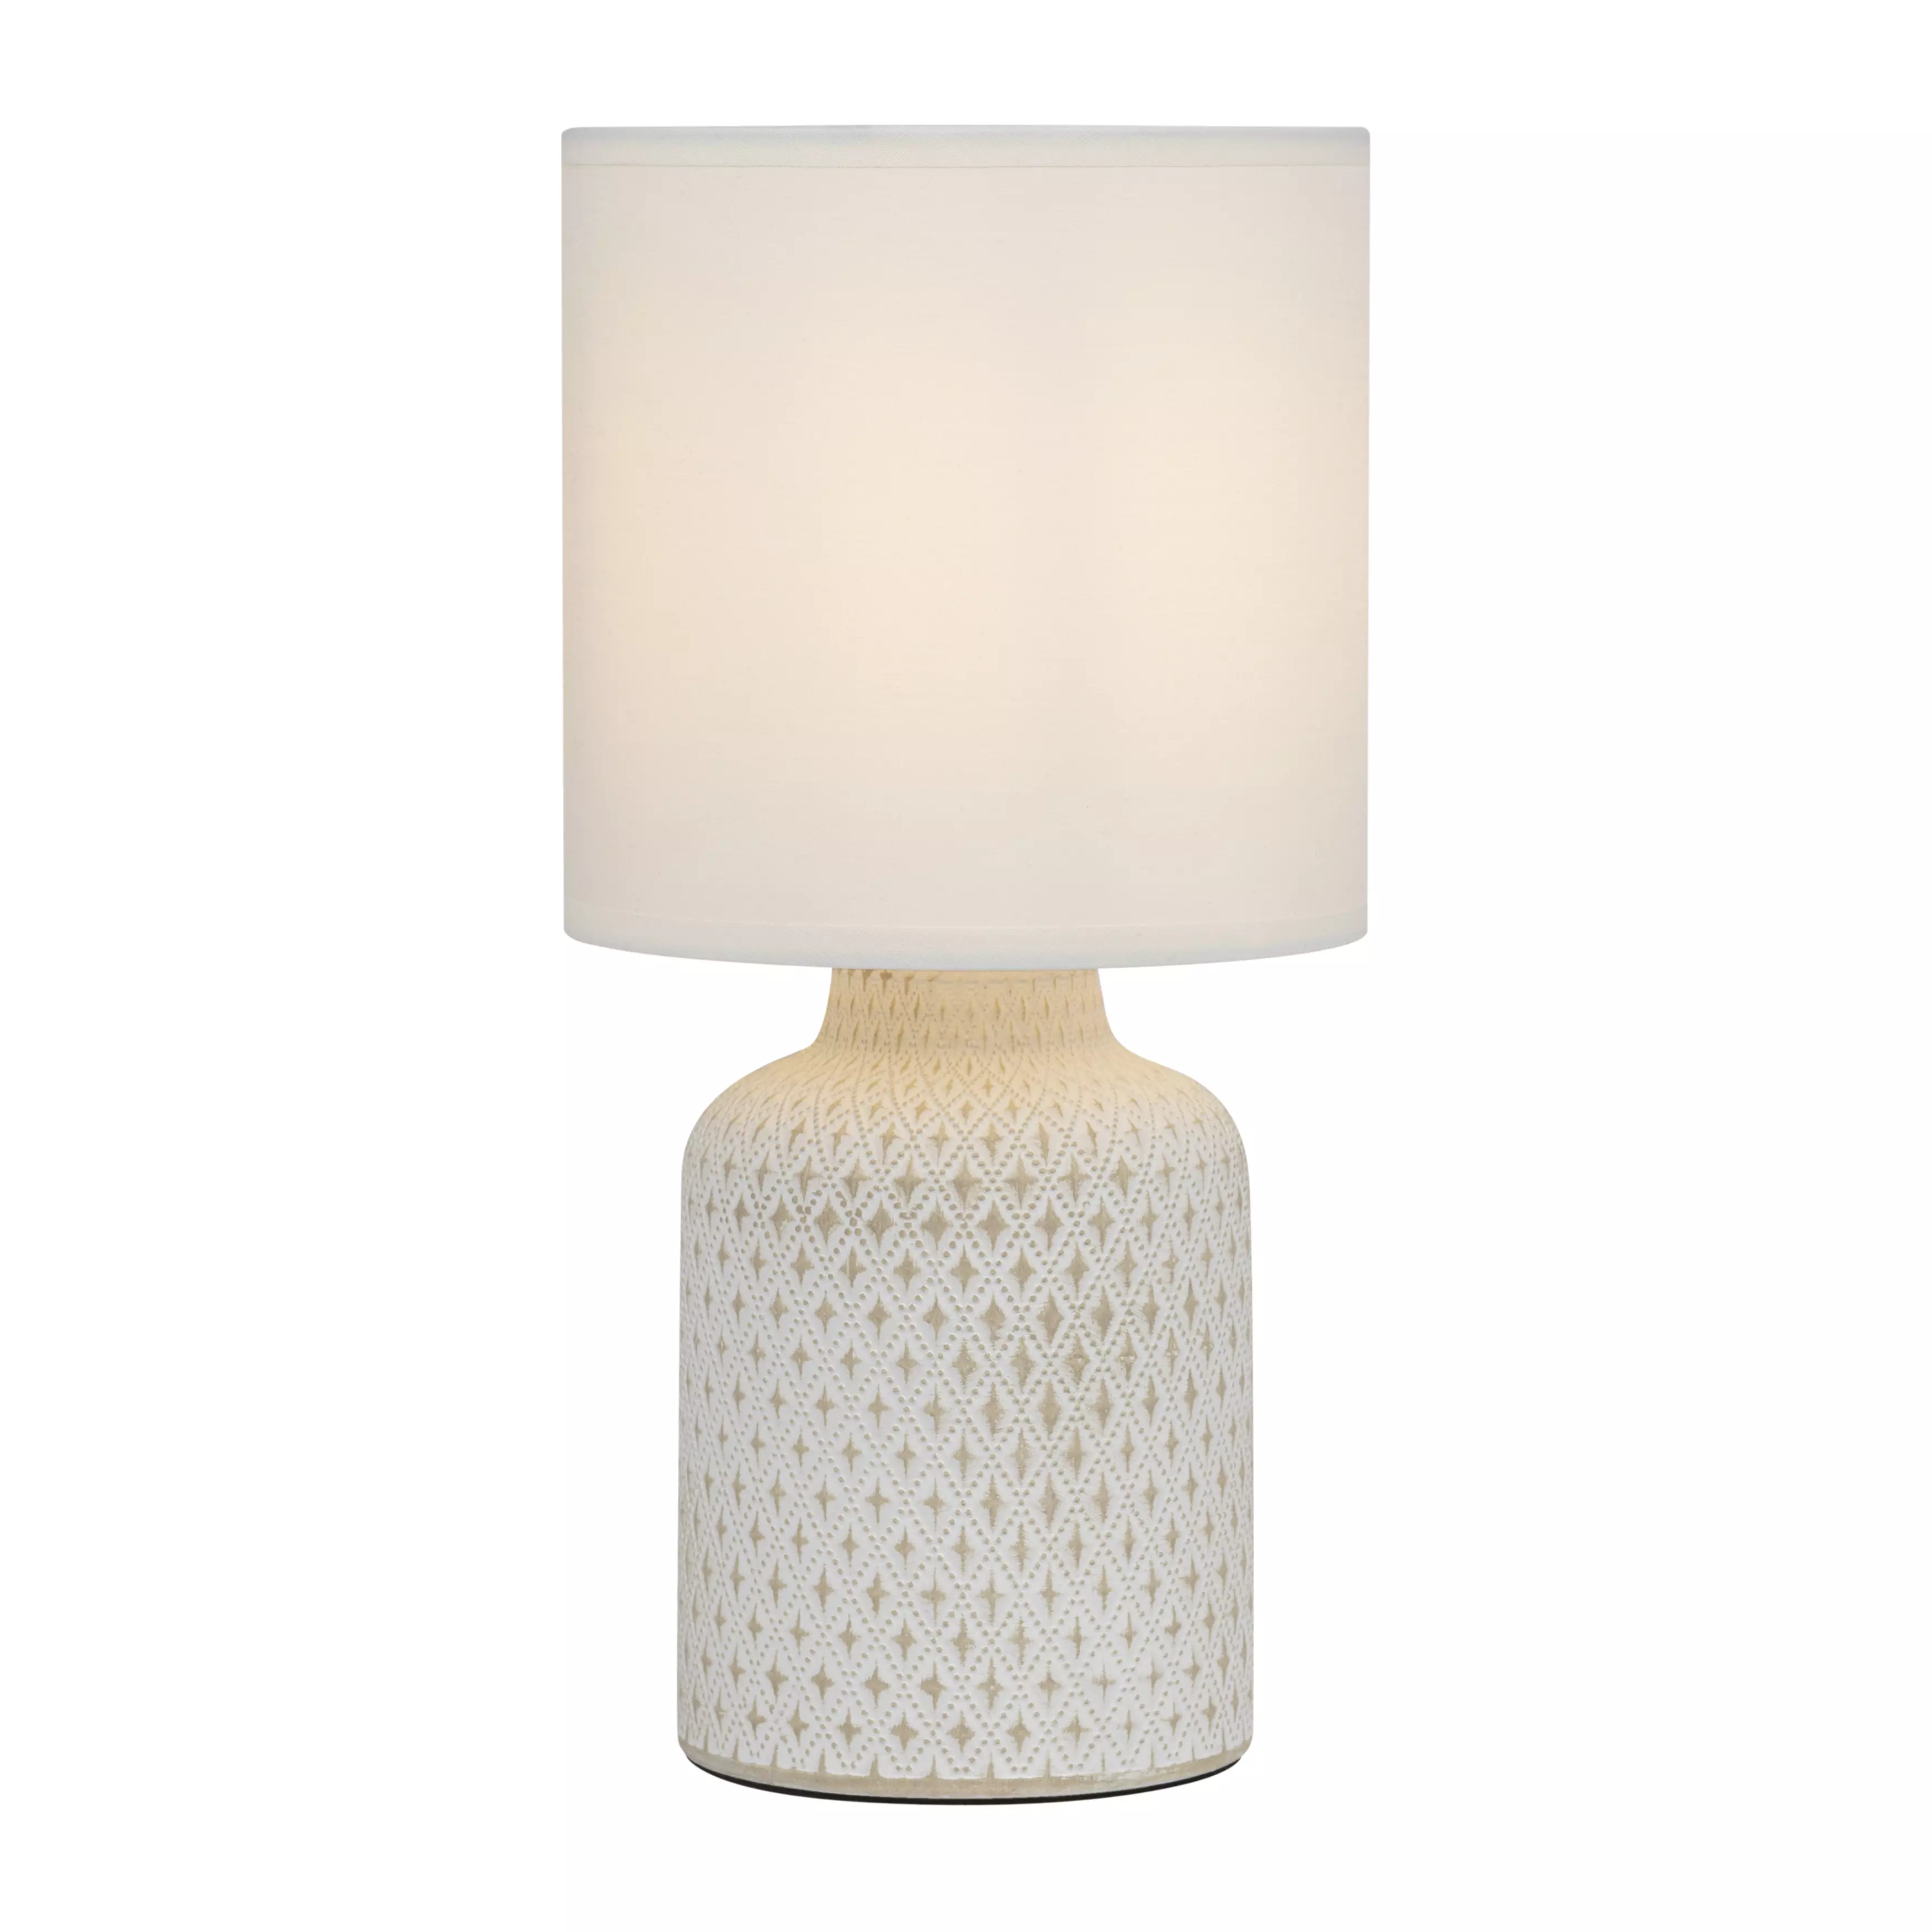 Настольная лампа Rivoli Sabrina 7043-502 1 * Е14 40 Вт керамика белая с абажуром